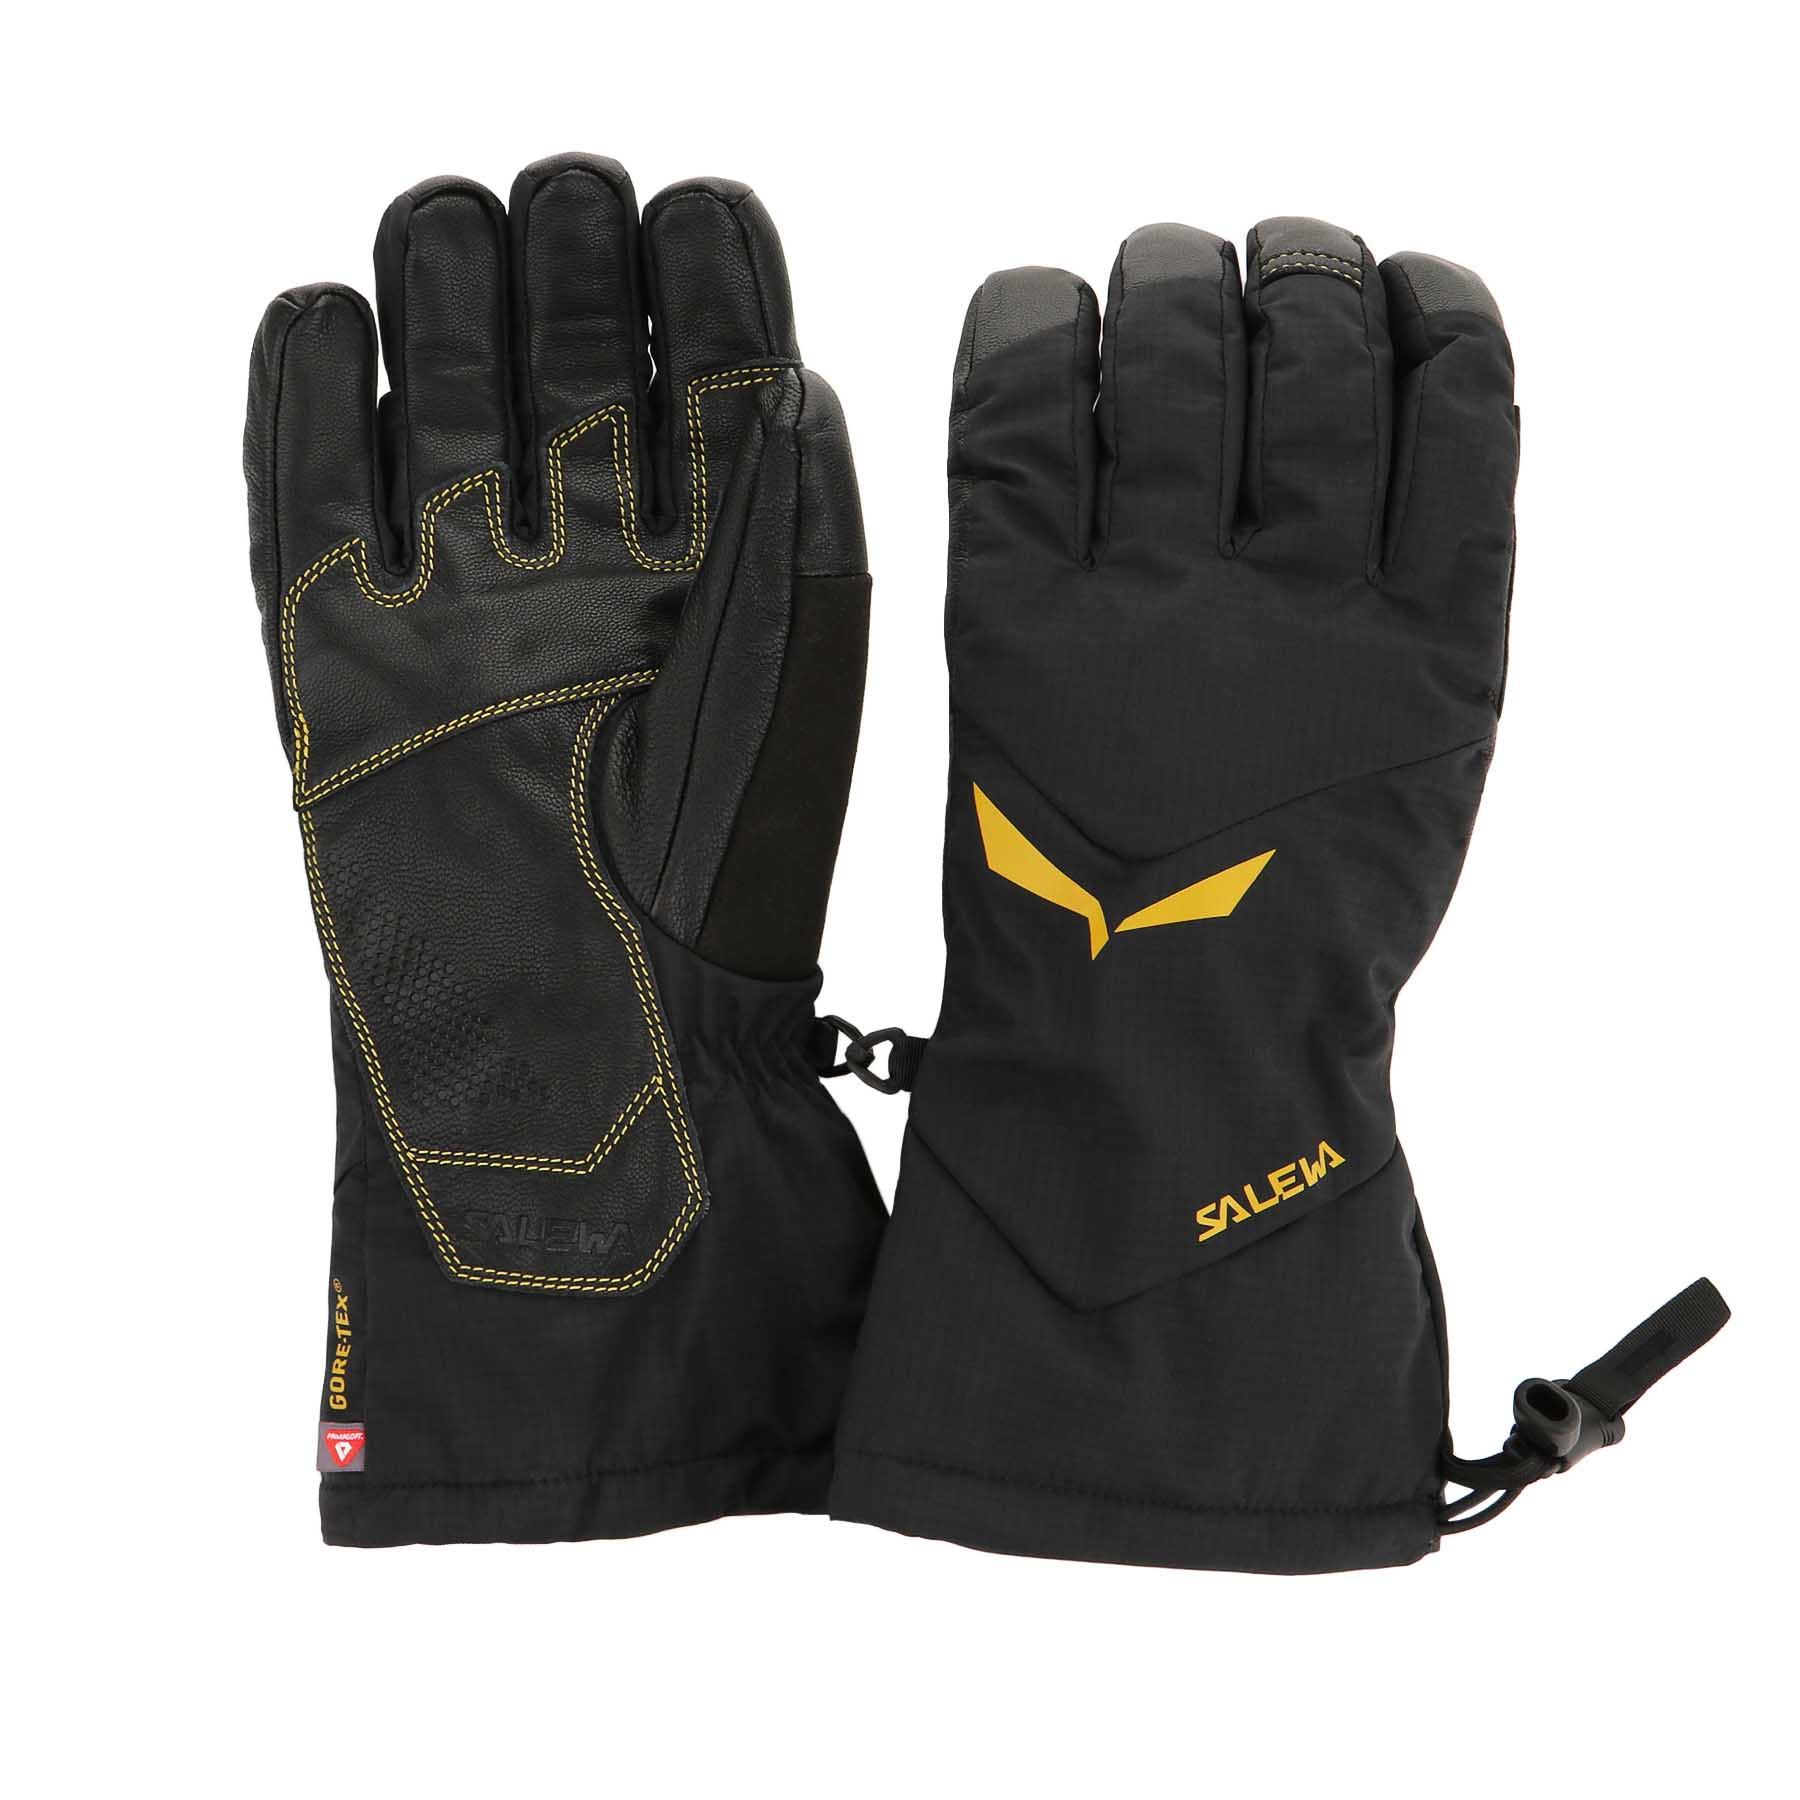 Salewa Gloves Antelao Gtx/Prl 25053-0901 | Online Store ButoManiak.pl